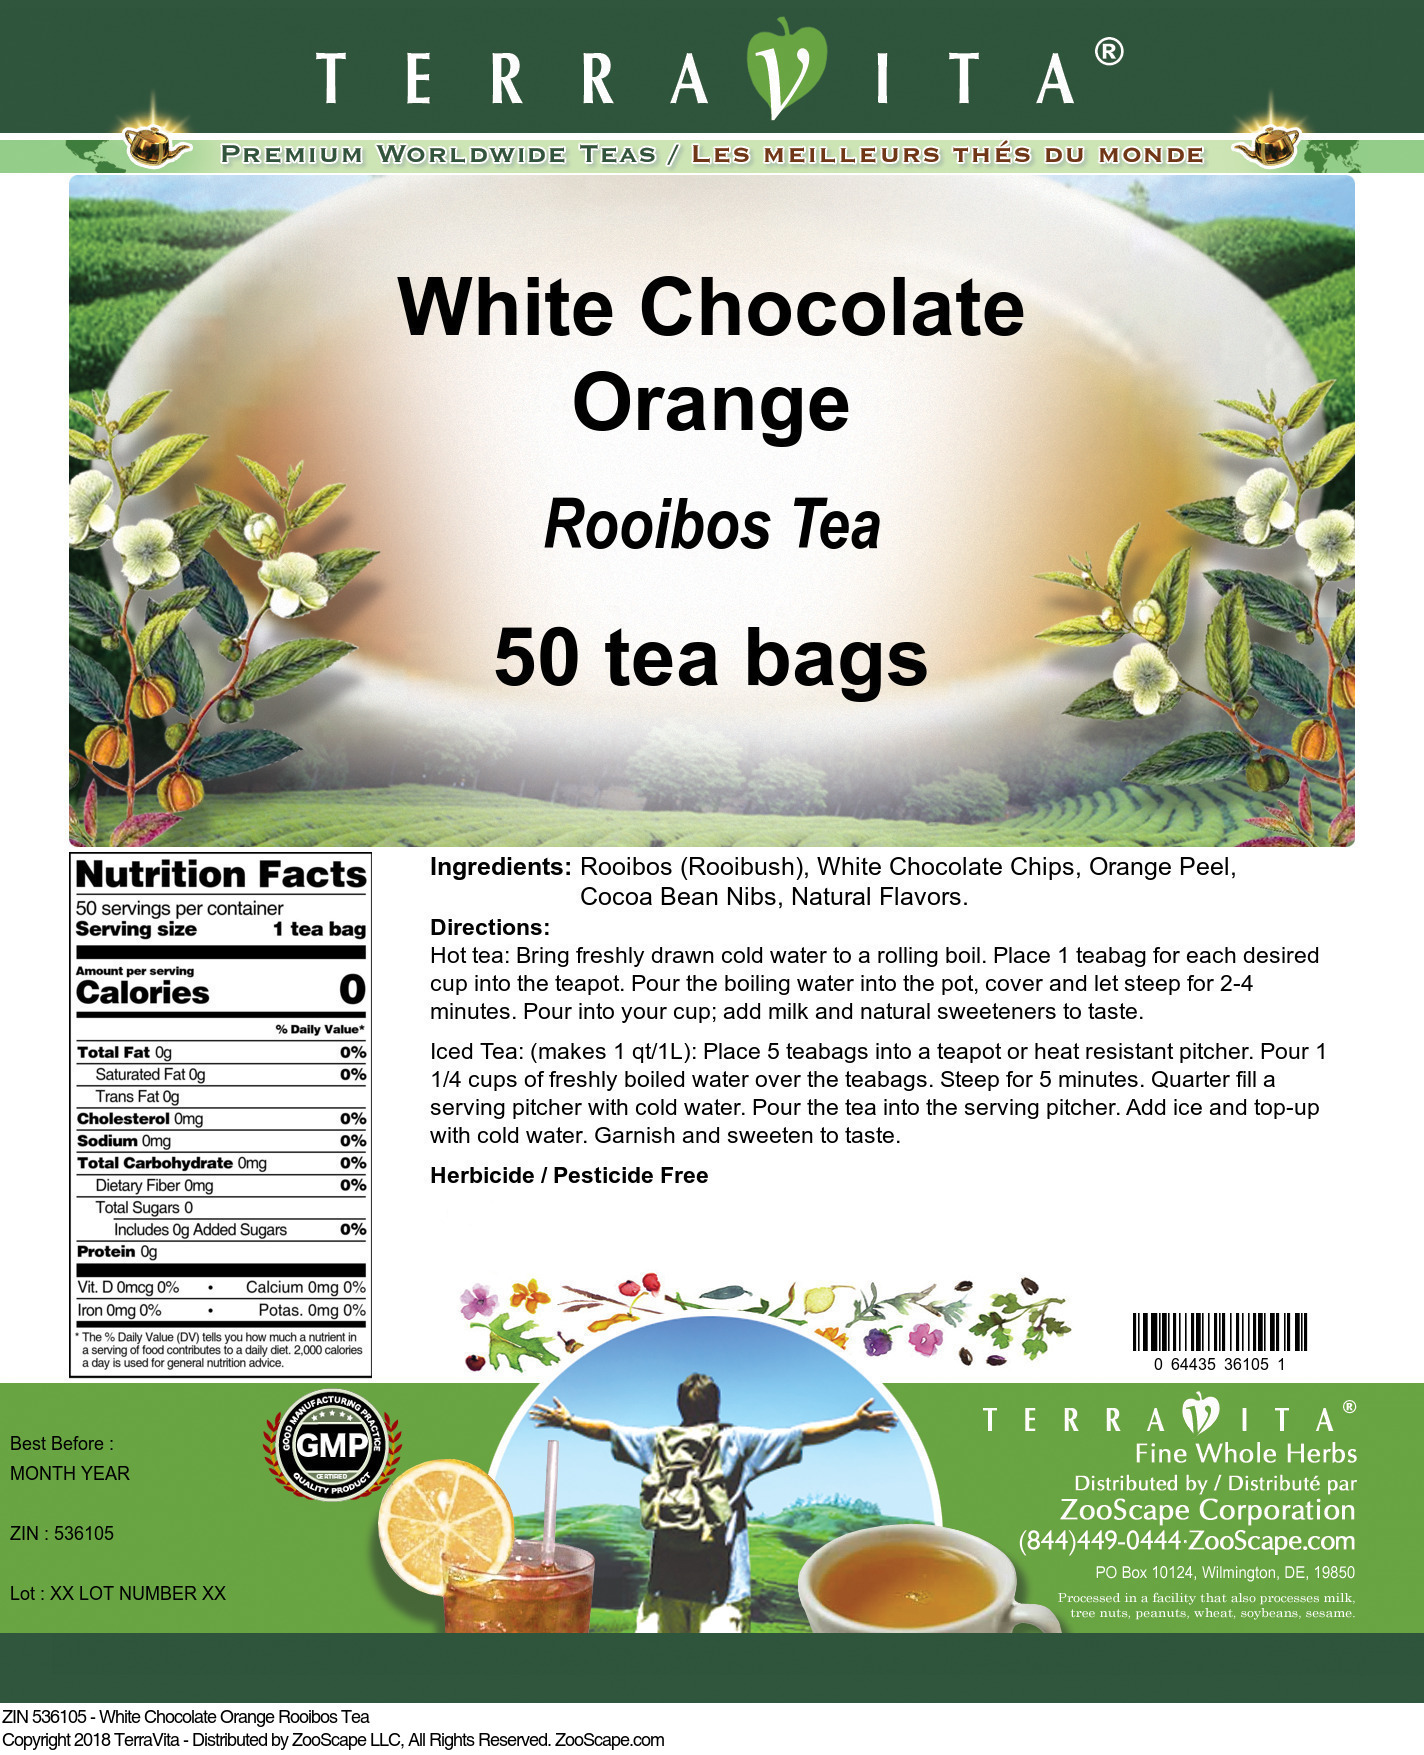 White Chocolate Orange Rooibos Tea - Label